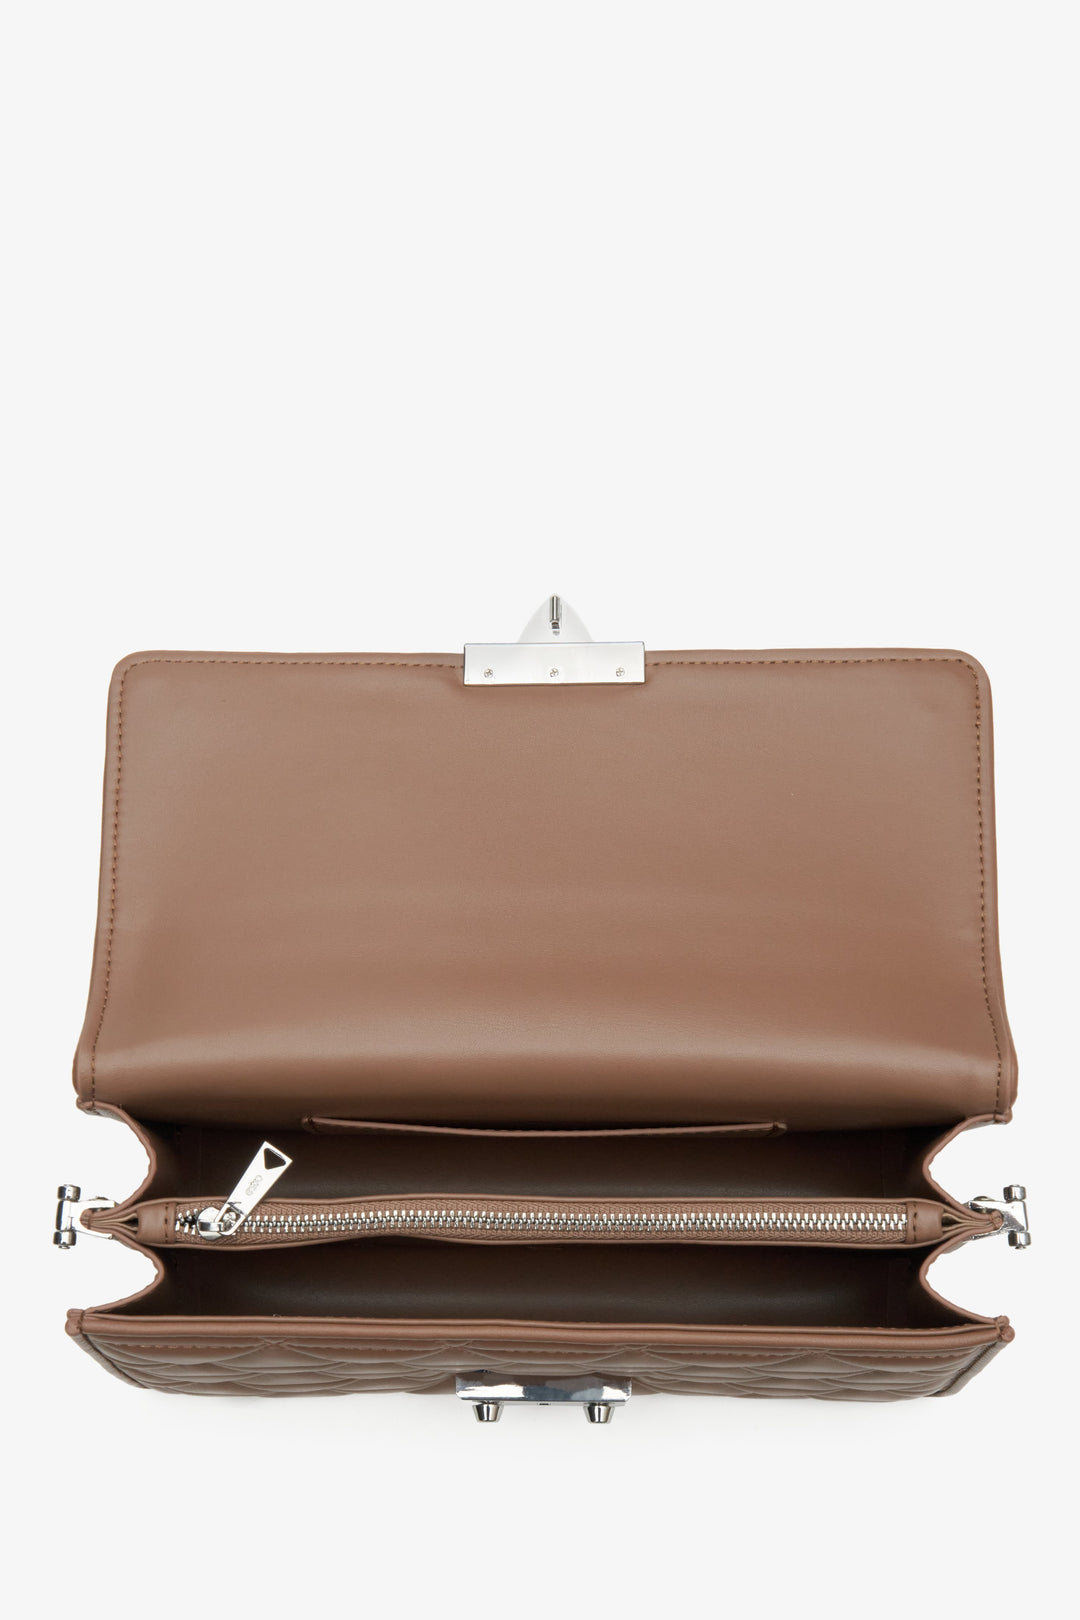 Estro women's brown leather shoulder bag - close-up on interior.